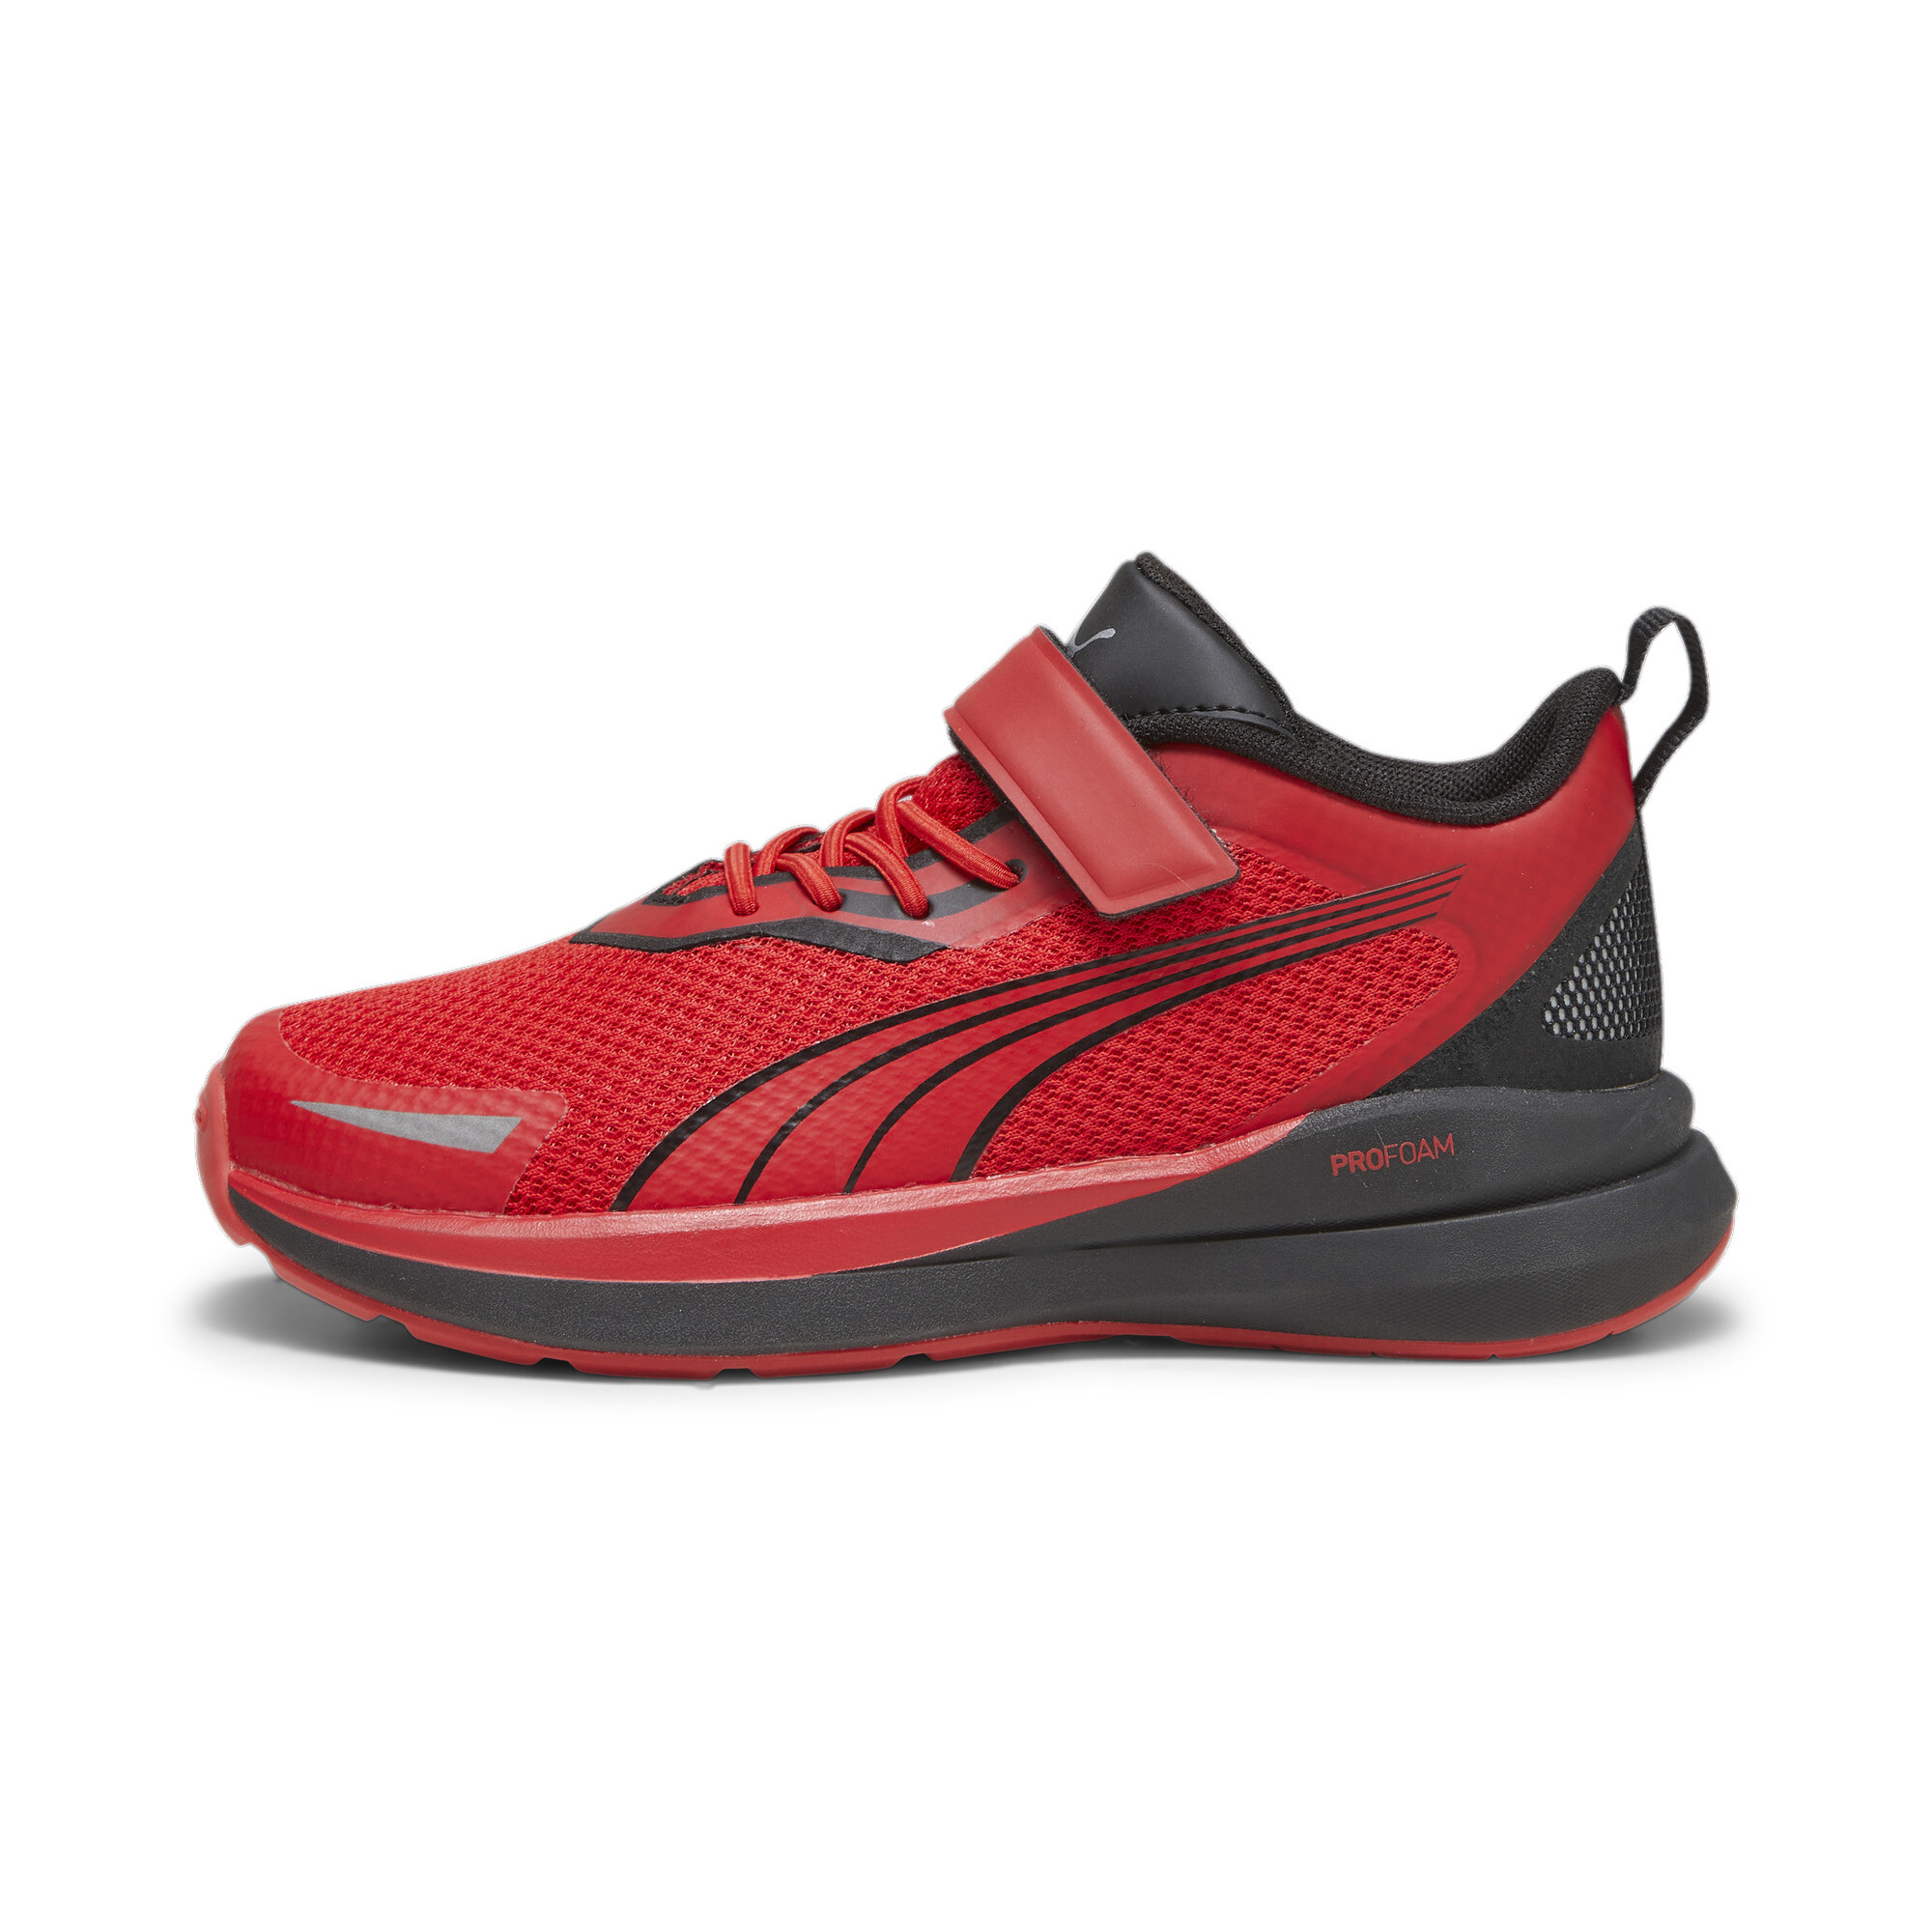 Puma Kruz Kids' Sneakers, Red, Size 27.5, Shoes